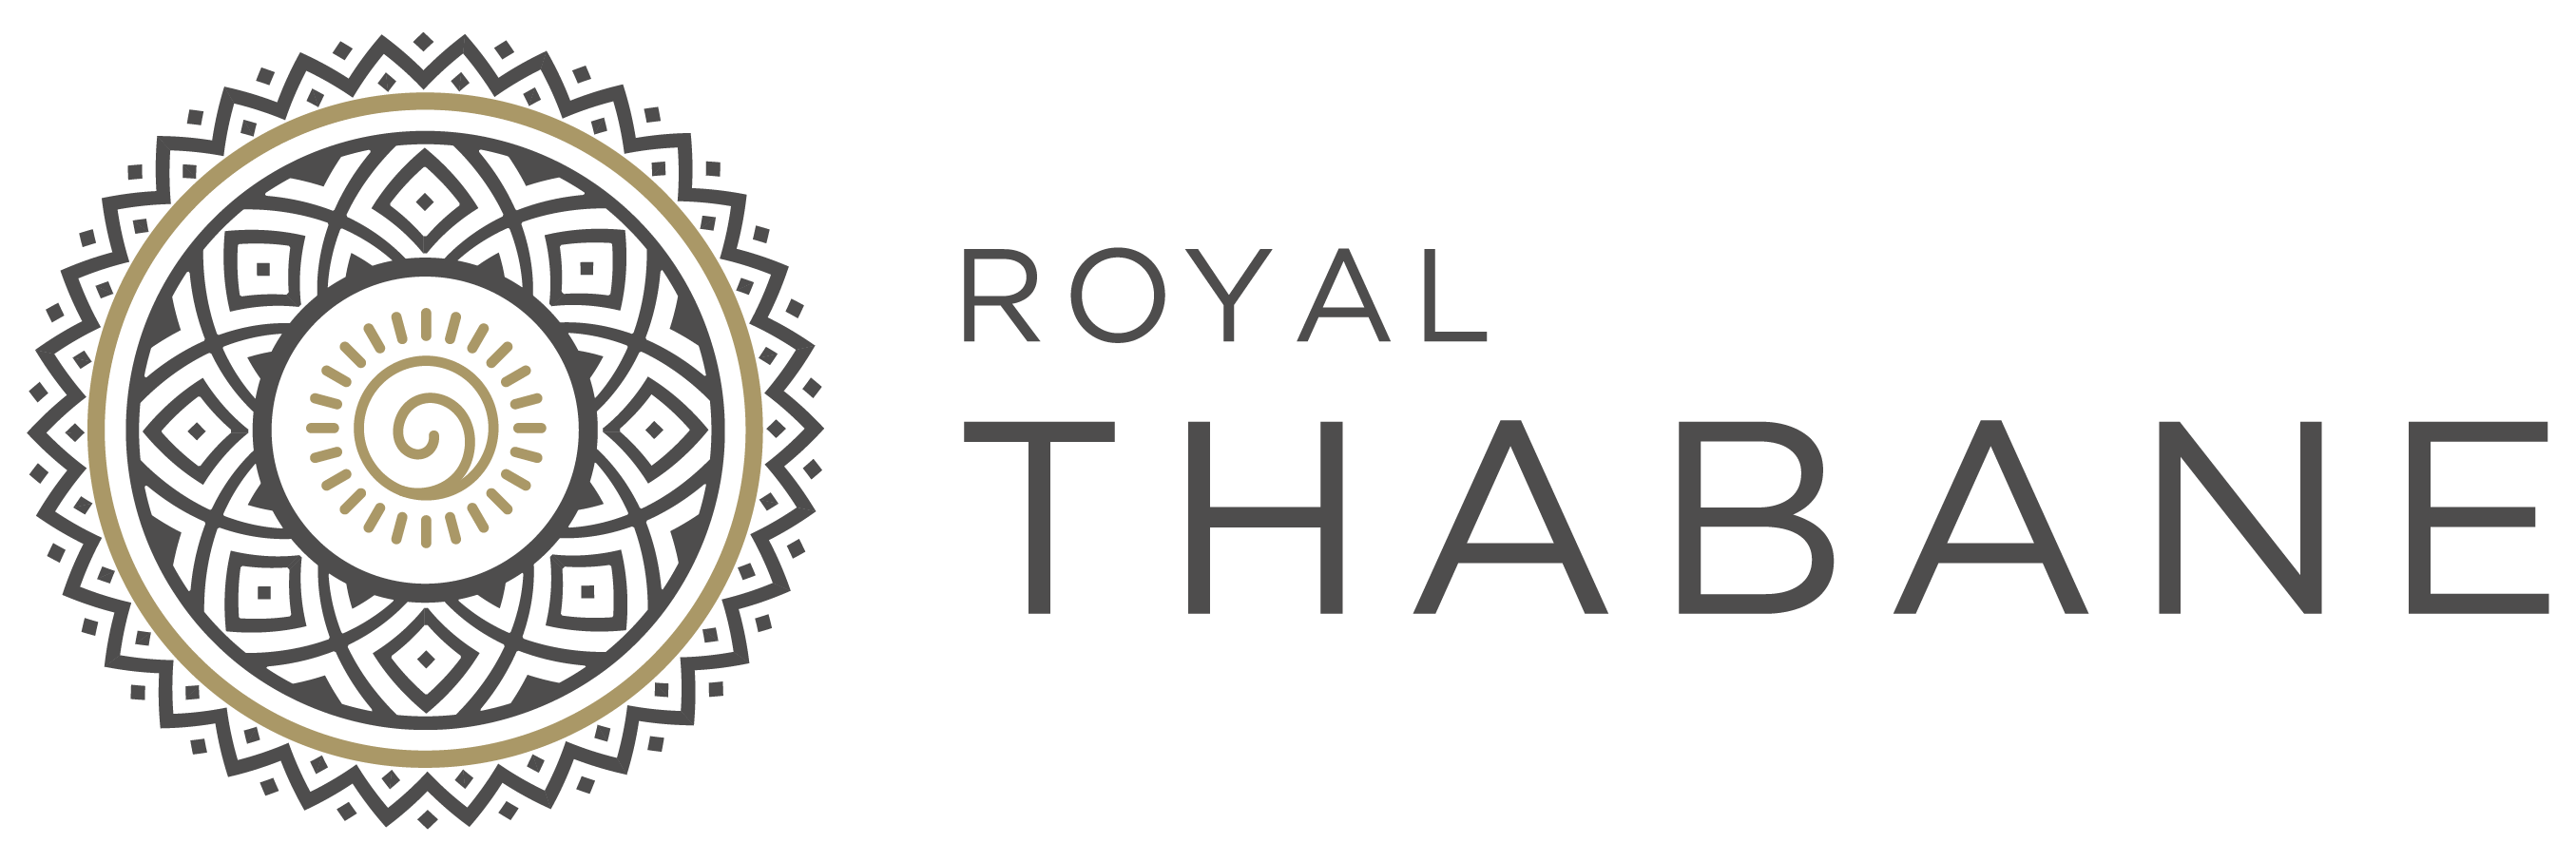 Royal Thabane Lodge